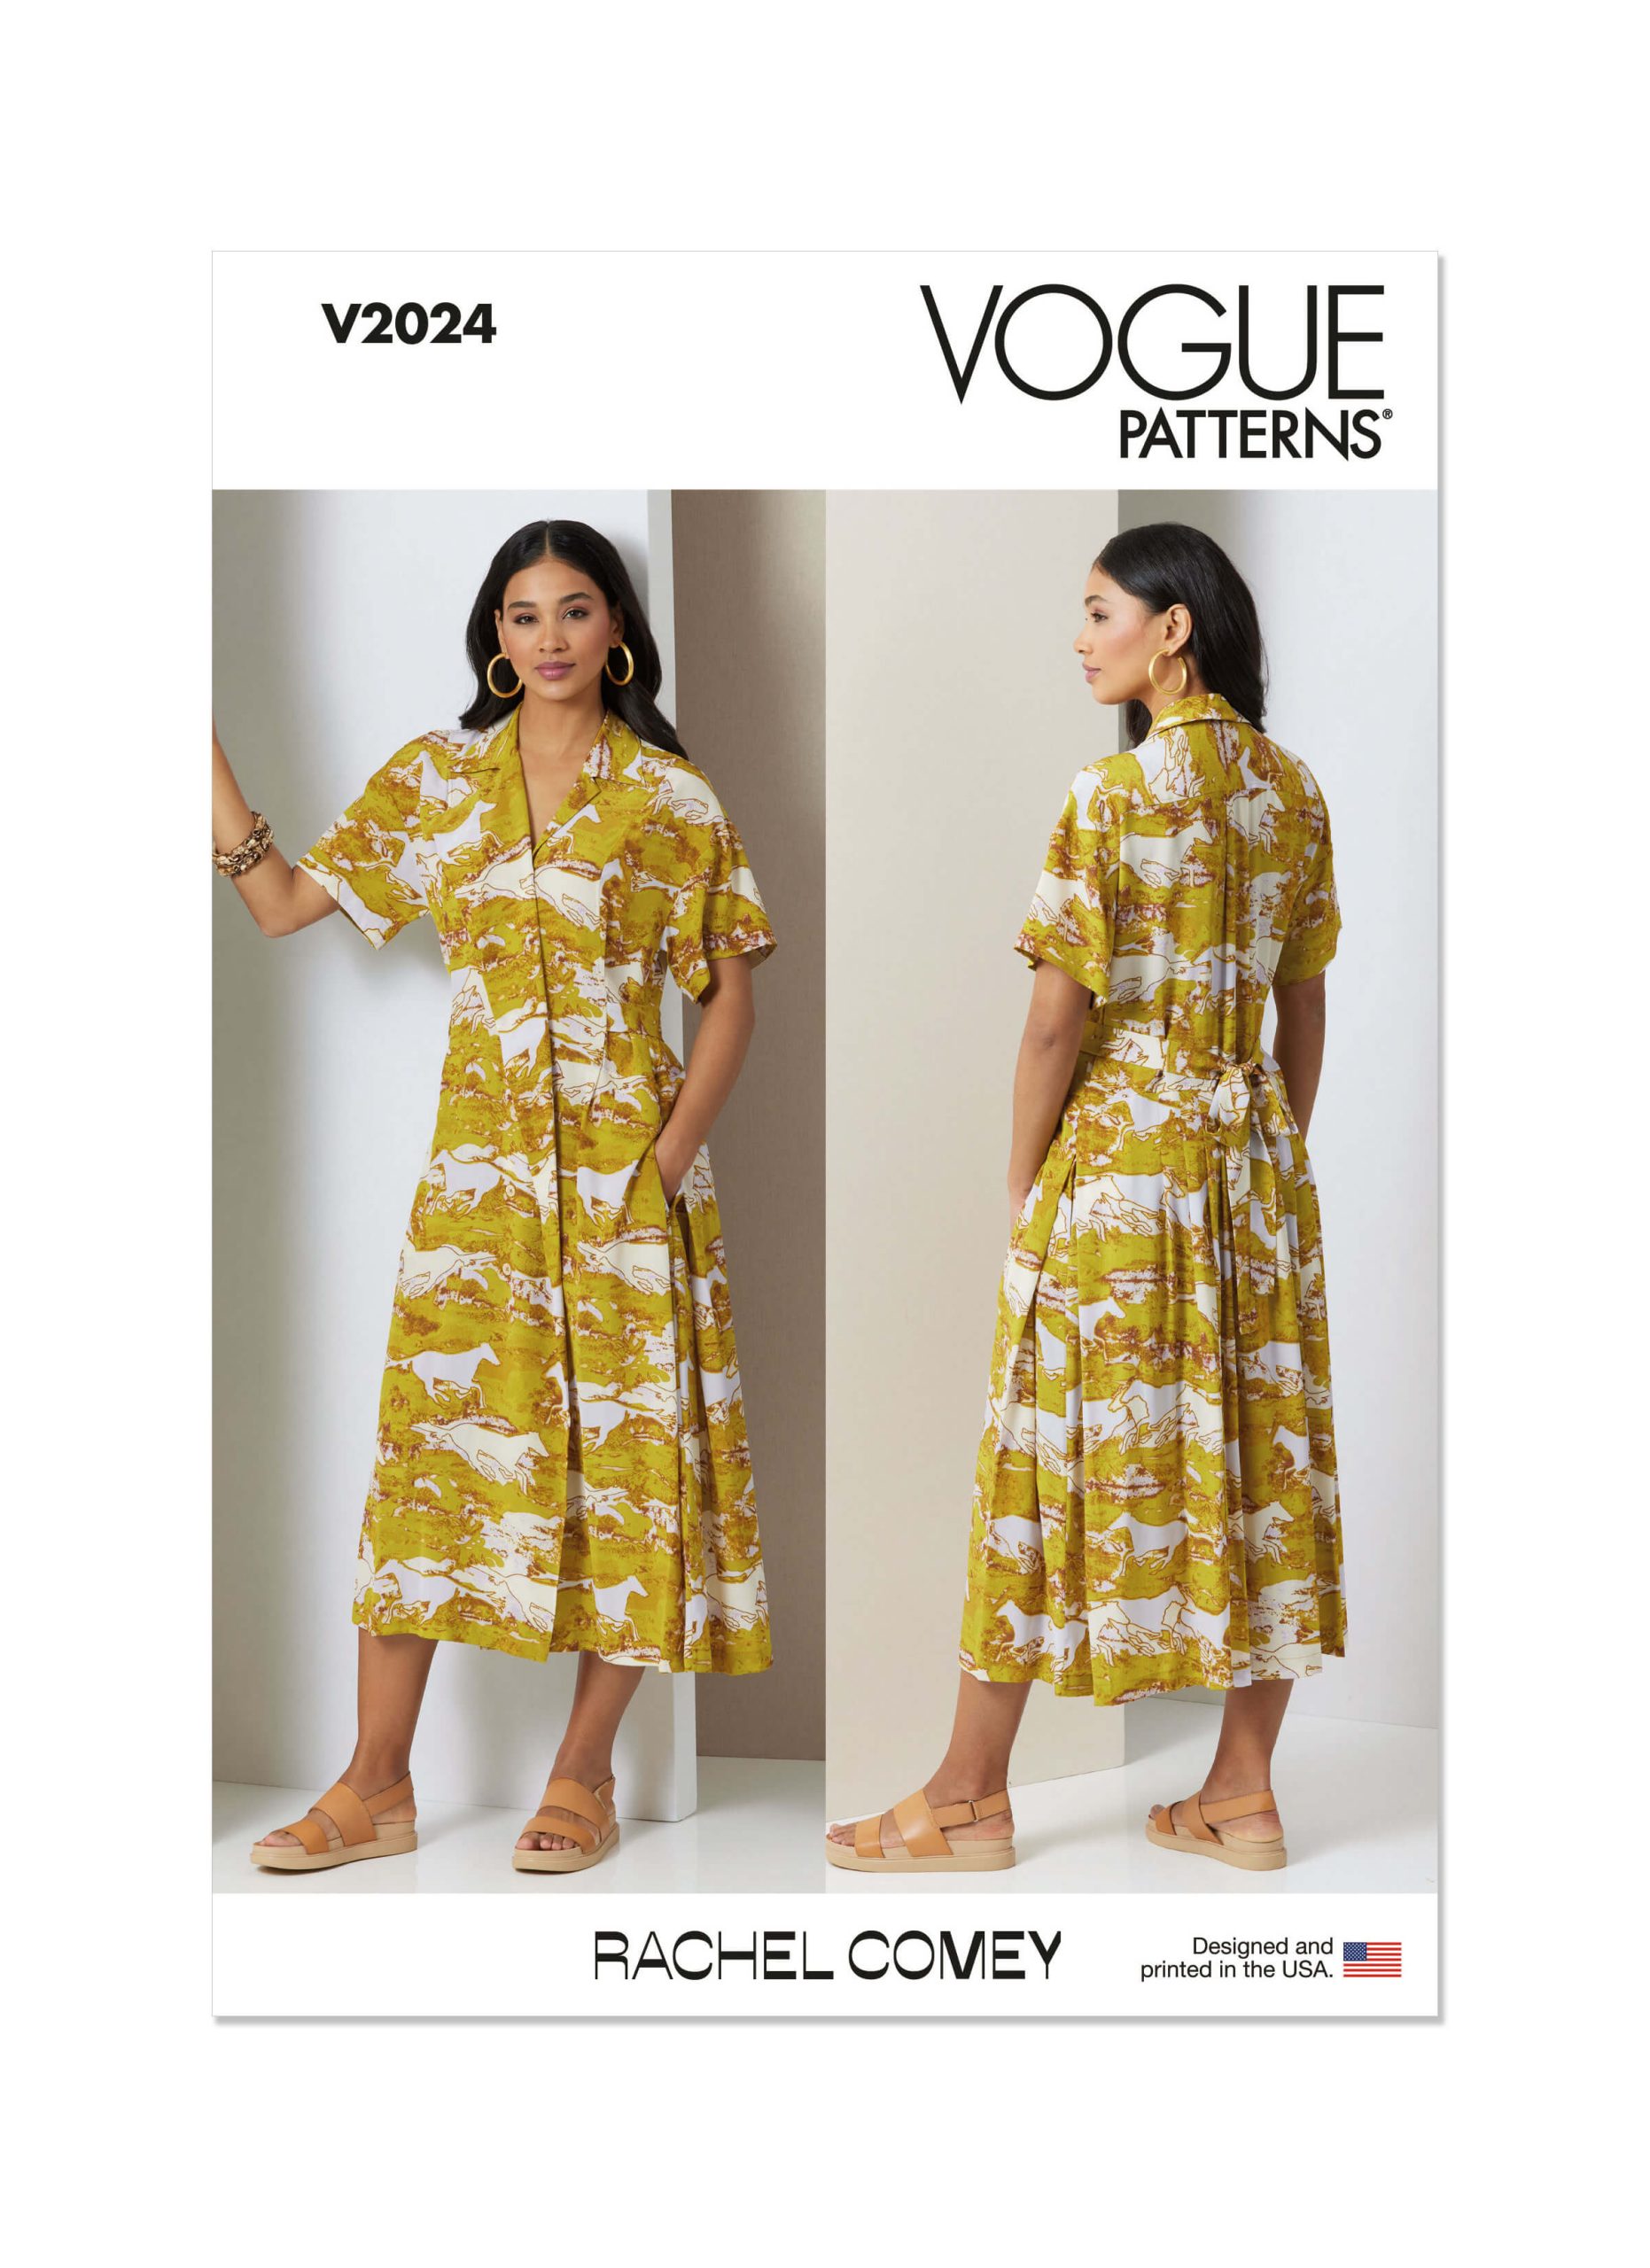 Vogue Patterns V2024 Misses' Dress by Rachel Comey